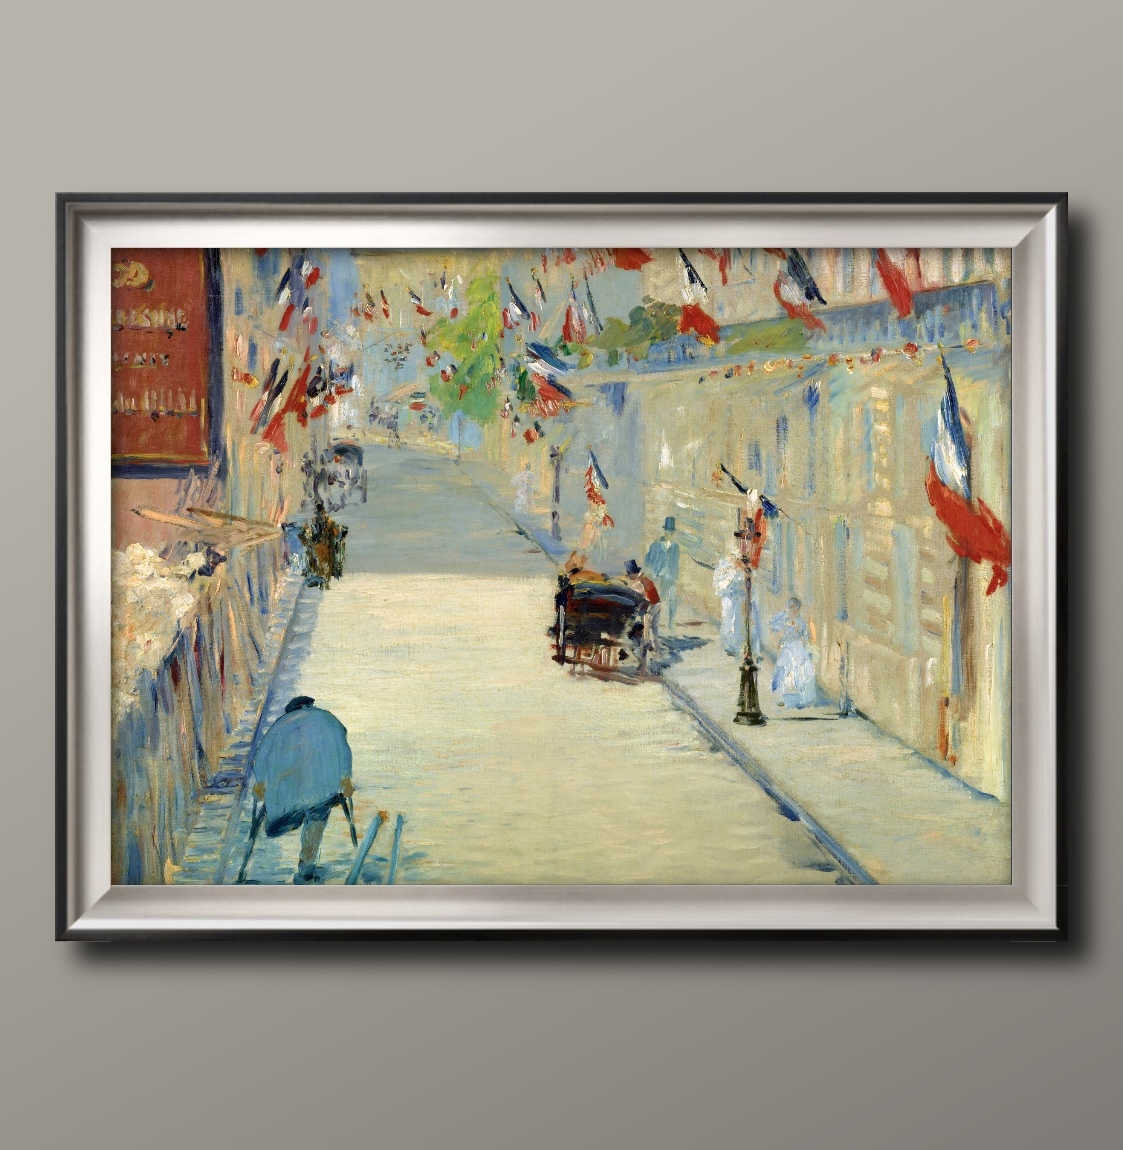 0865■¡¡Envío gratis!! Póster artístico pintura tamaño A3 Edouard Manet Minié Calle decorada con banderas ilustración papel mate nórdico, Alojamiento, interior, otros